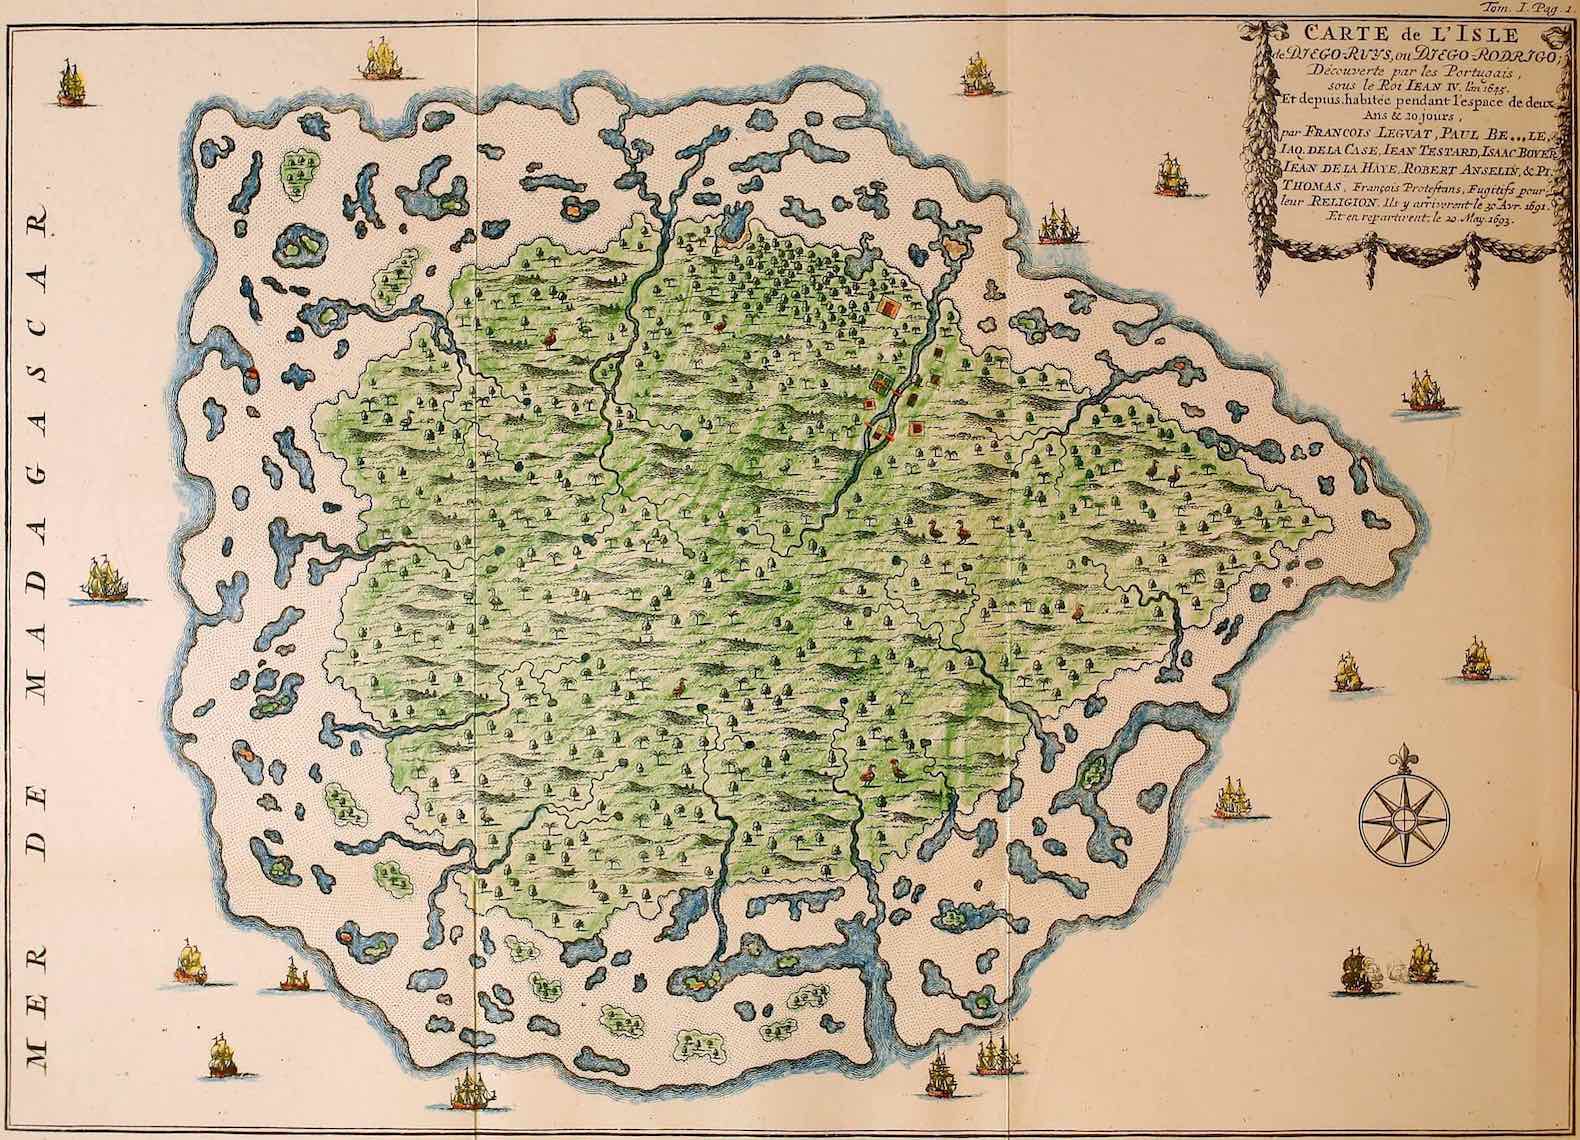 François Leguat's map of Rodrigues Island